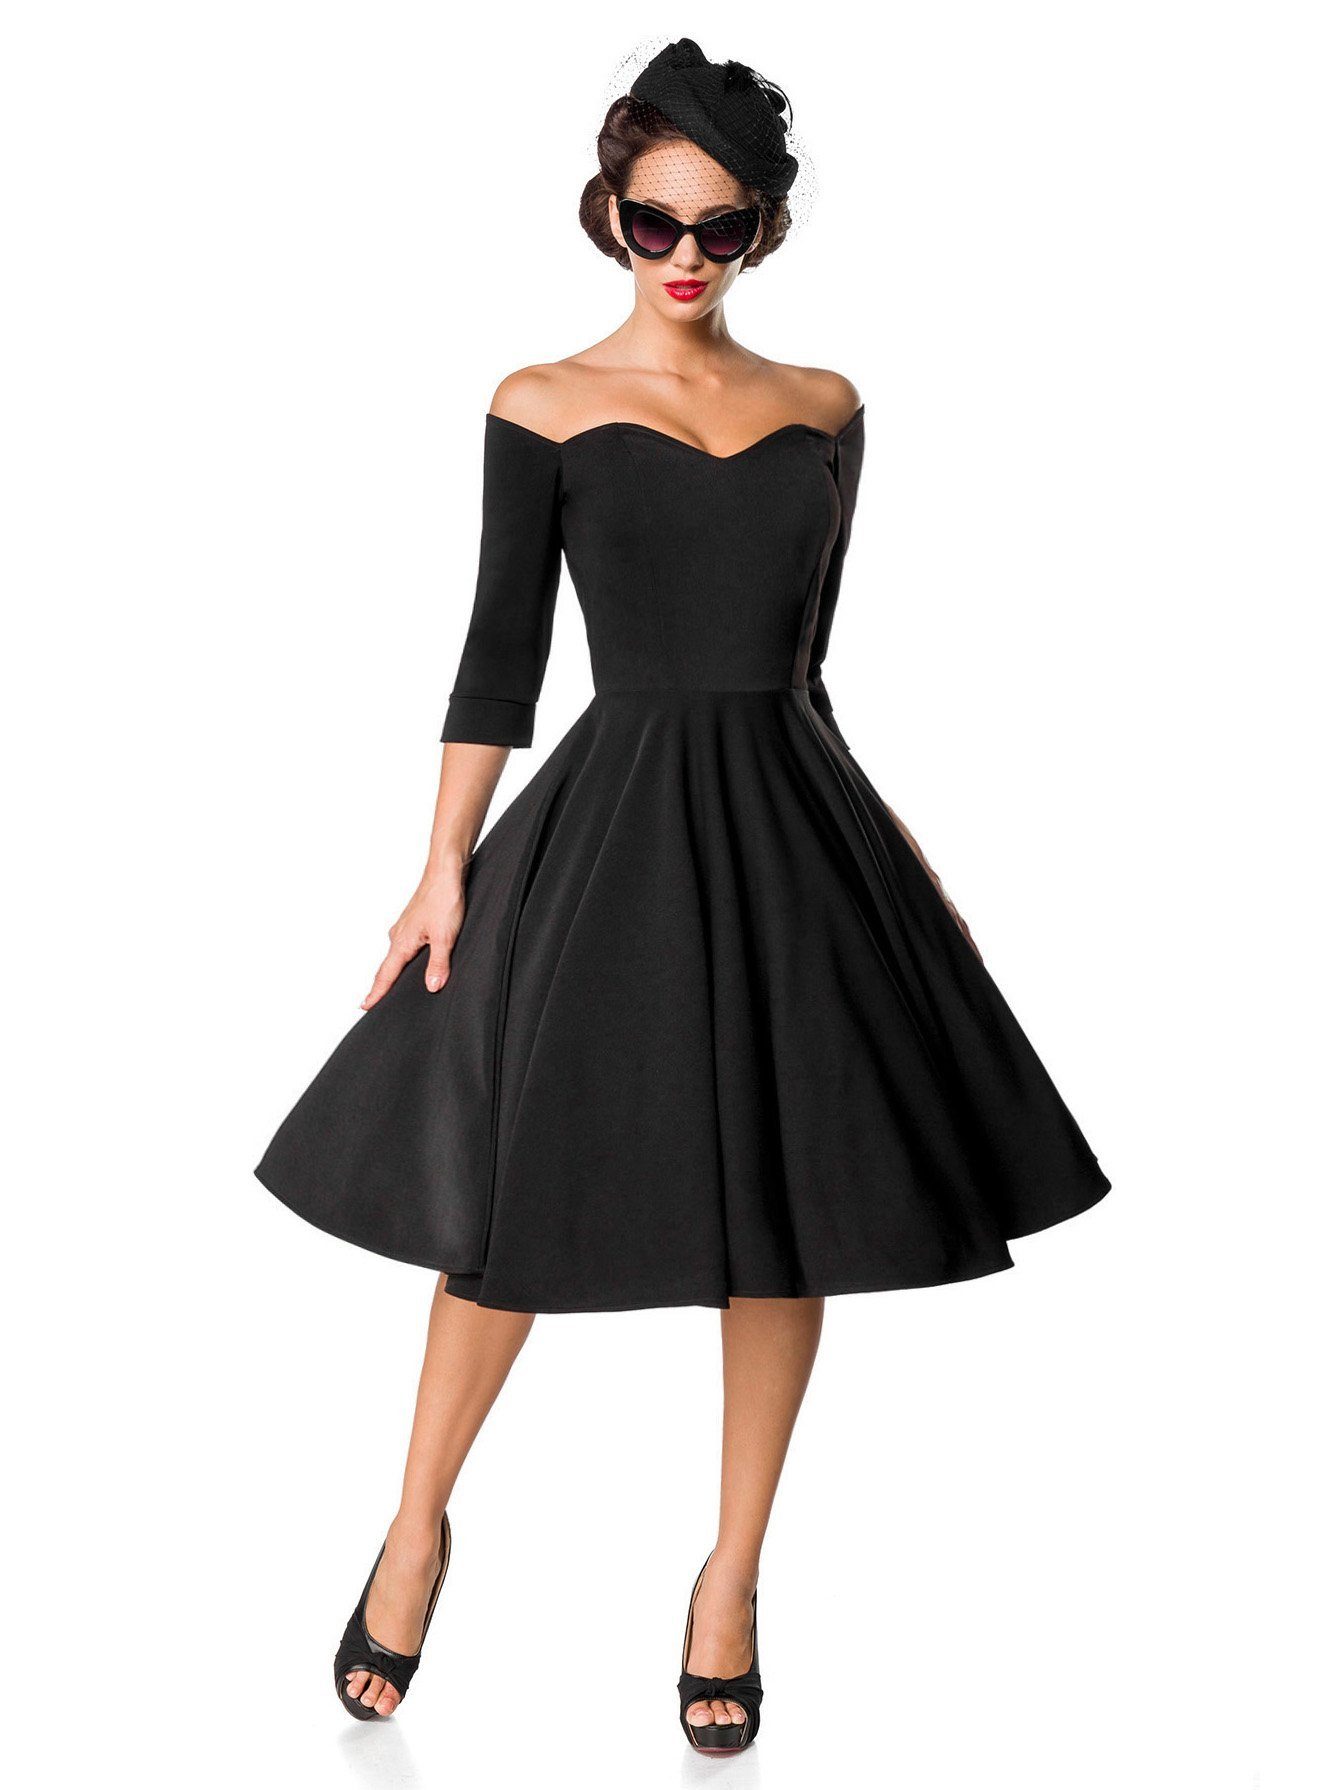 Metamorph Kostüm Vintage Swing-Kleid, Elegantes 50er Jahre Rockabilly Kleid